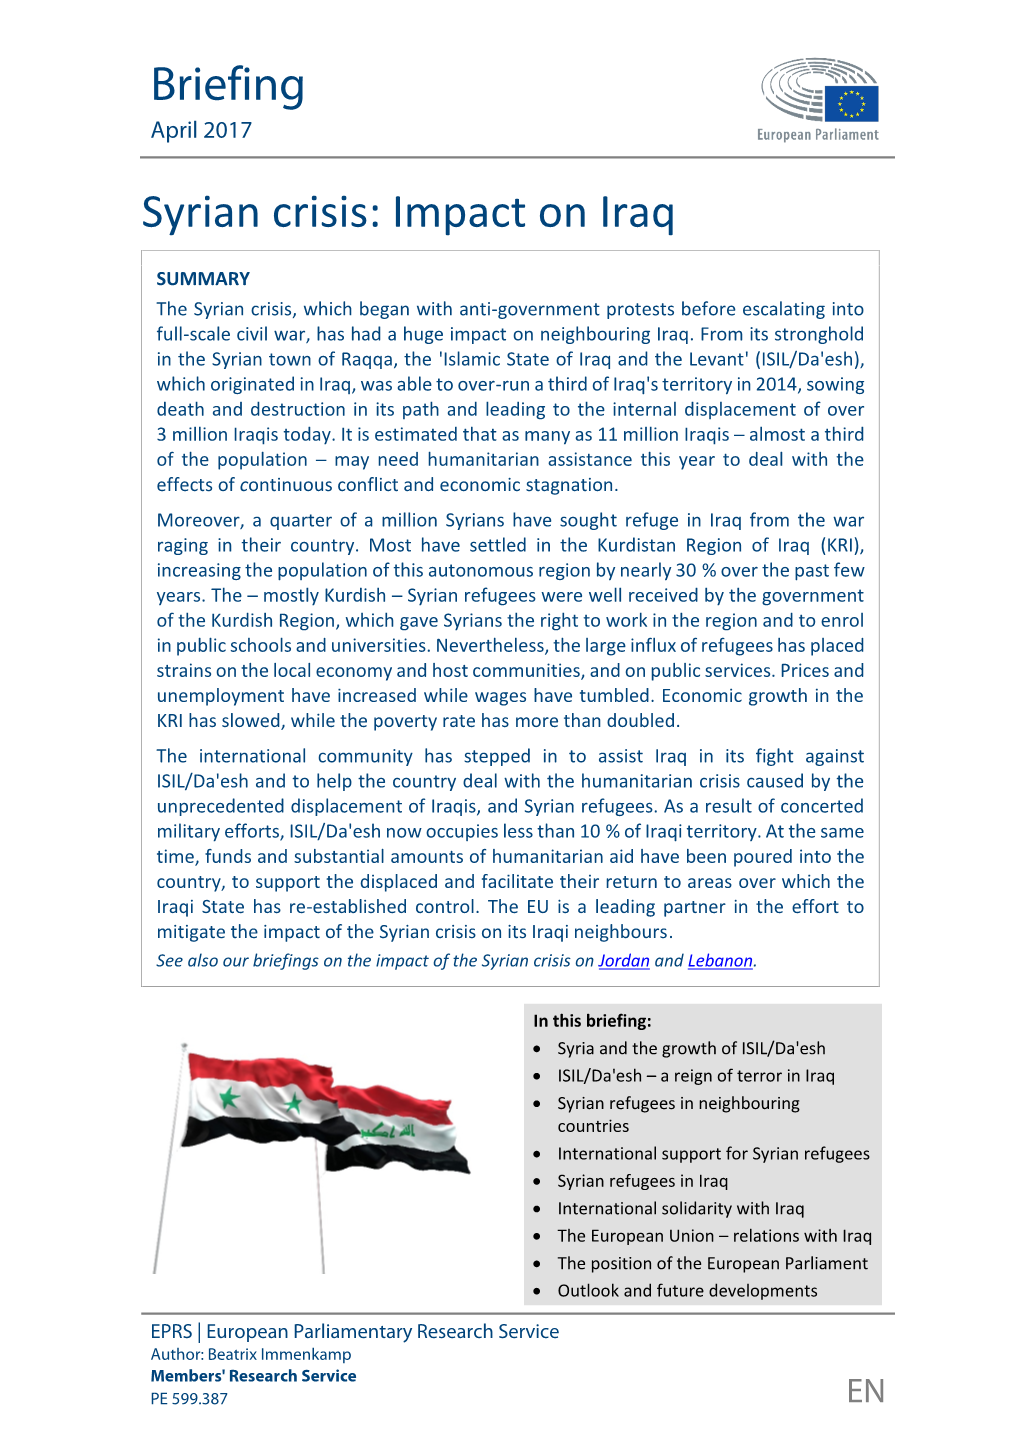 Syrian Crisis: Impact on Iraq